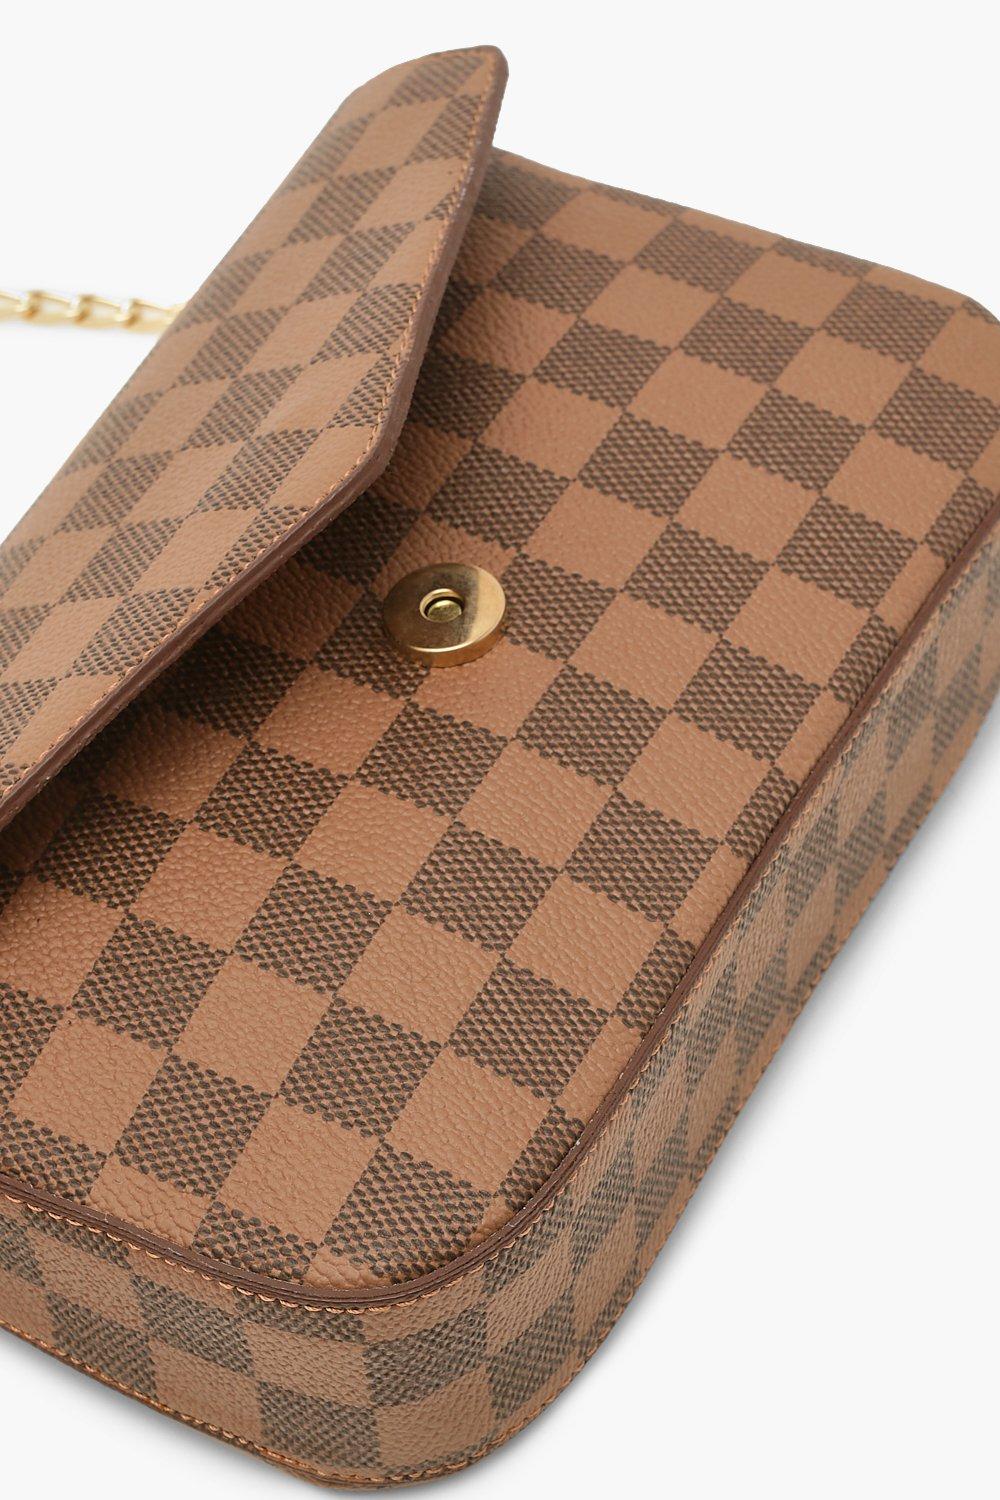 Brown Woven Checker Shoulder Bag